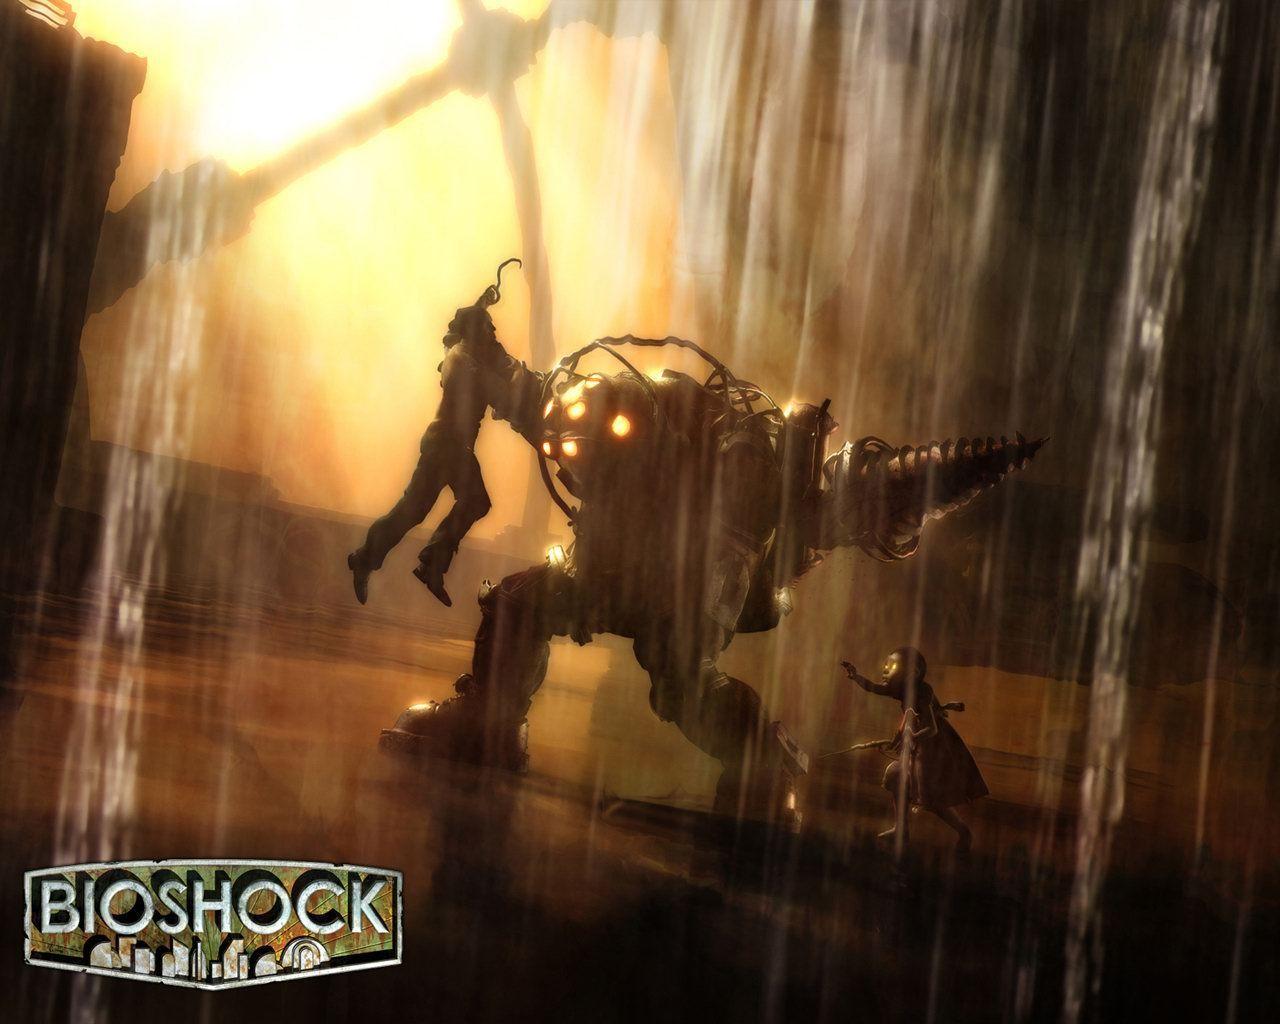 Download: Bioshock Wallpaper 04 Bioshock 1 Wallpaper